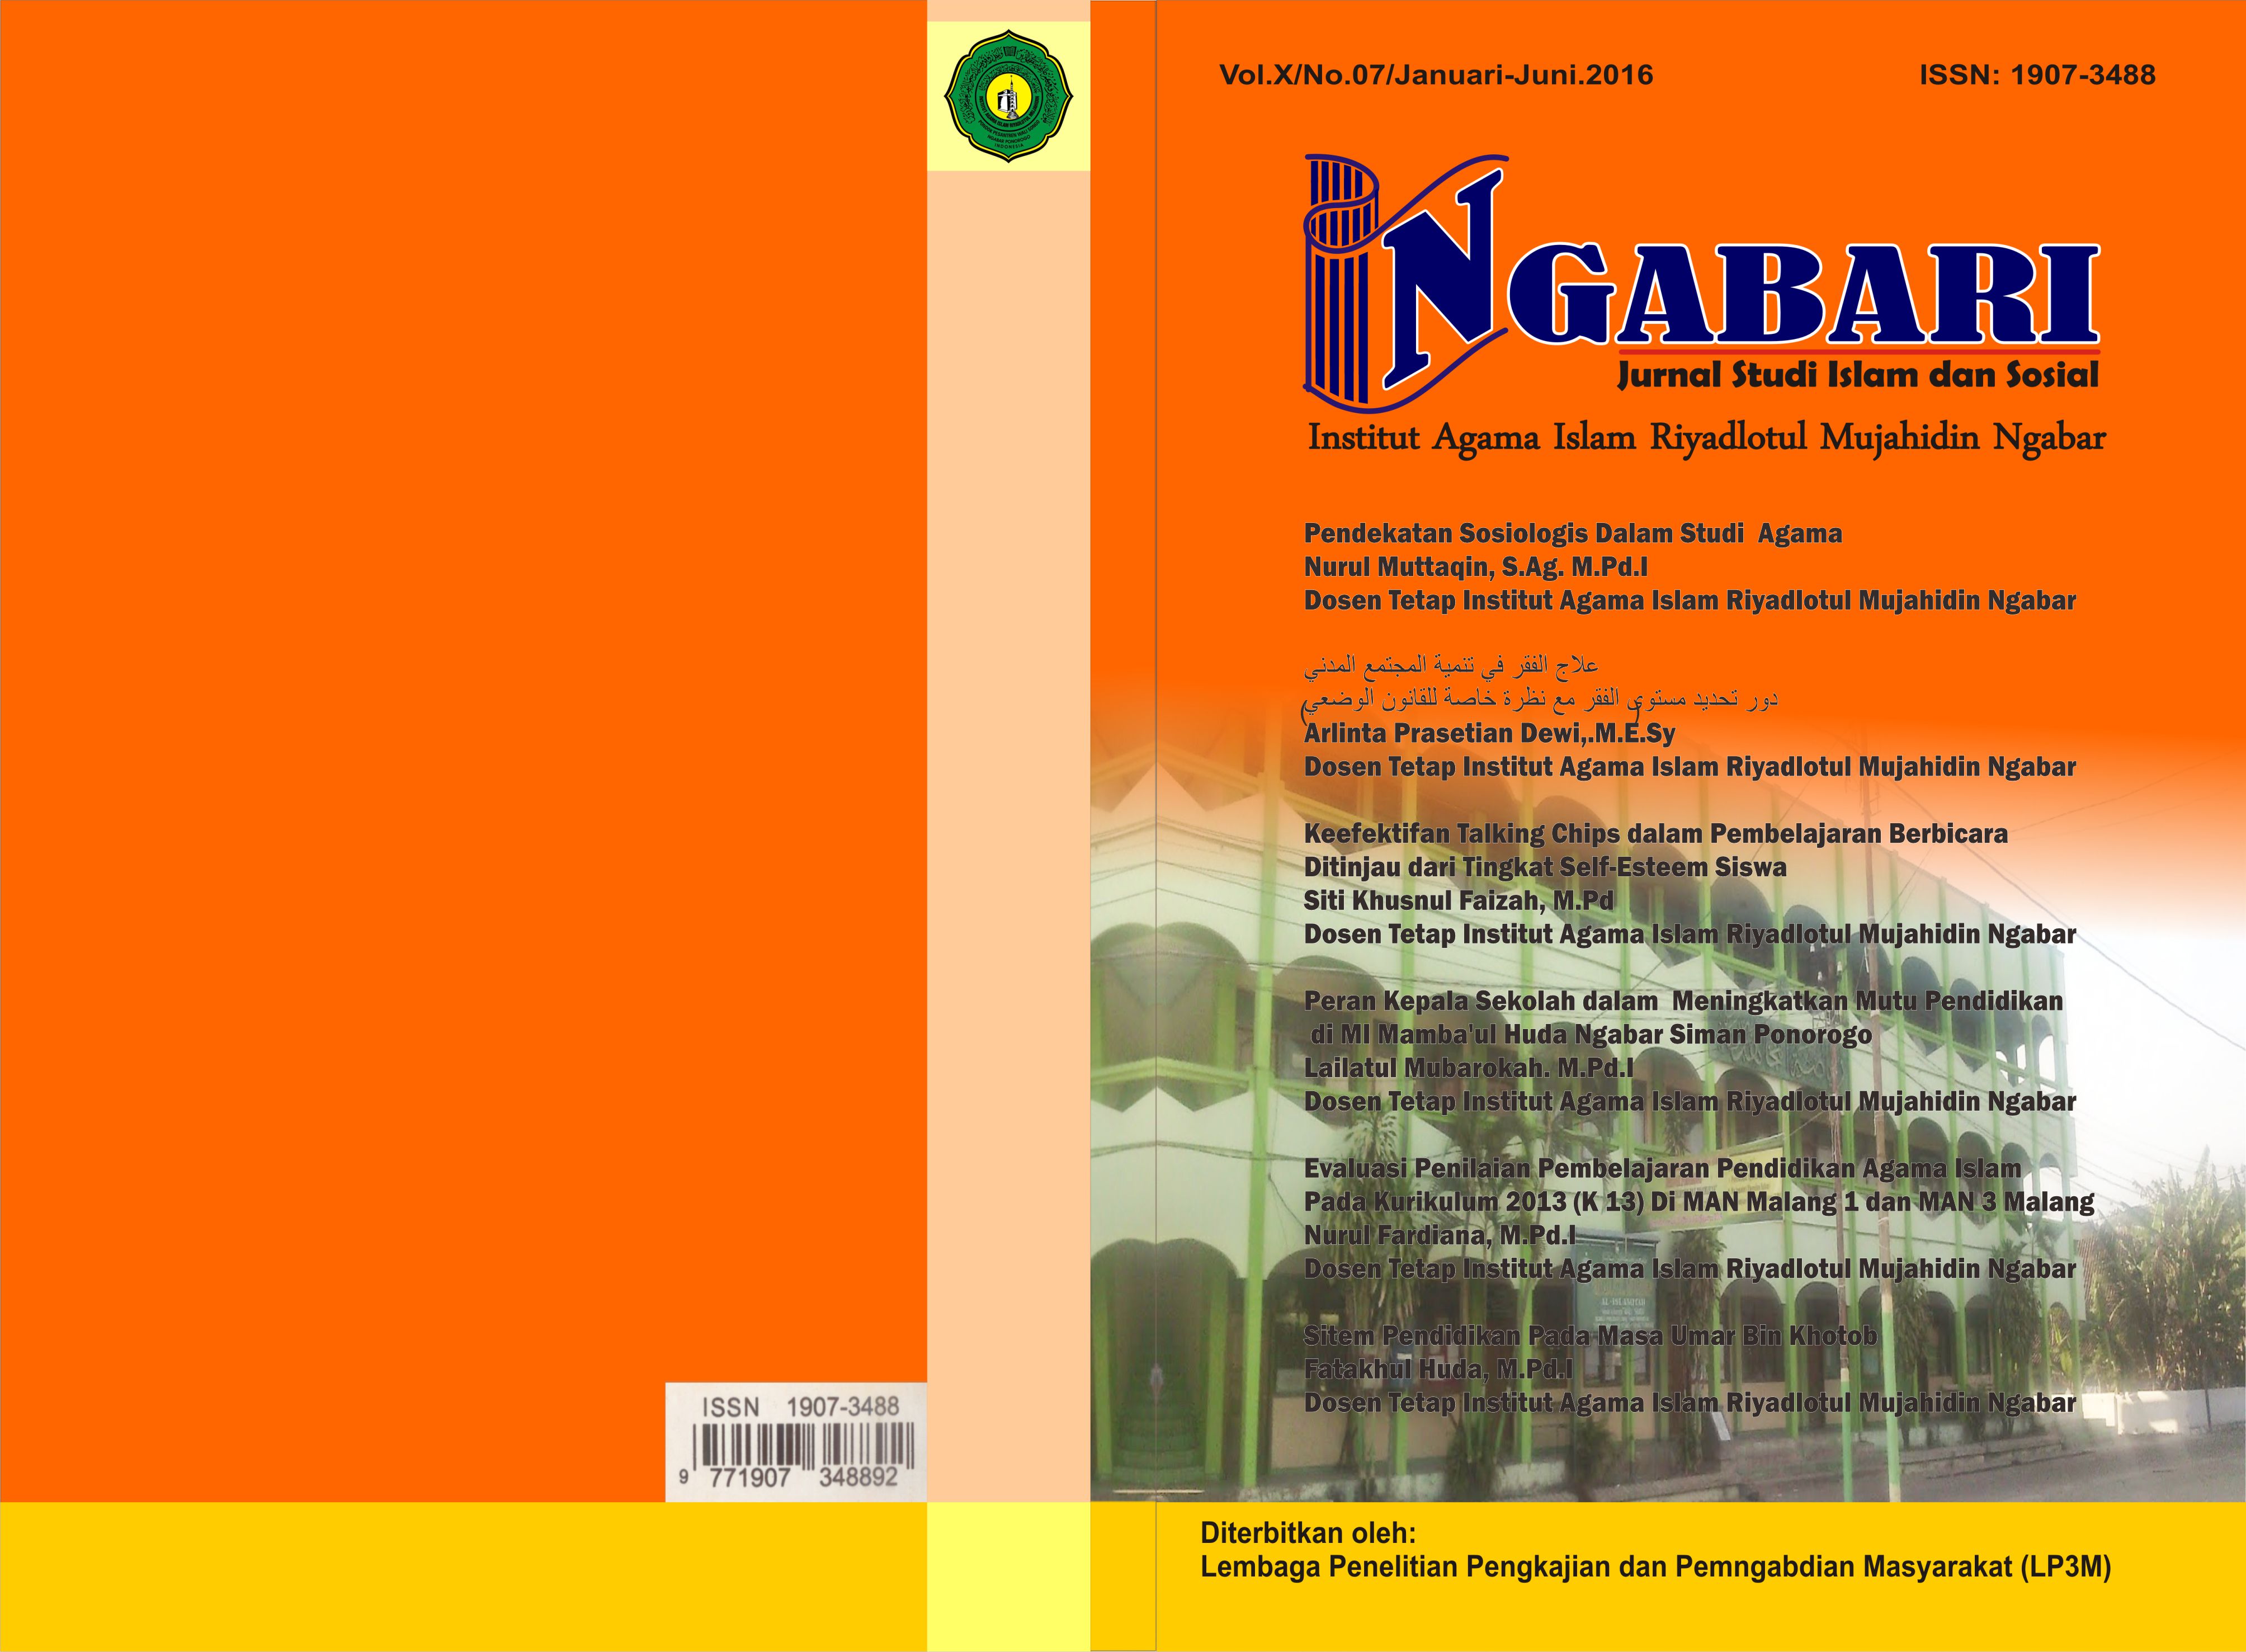 NGABARI JURNAL STUDI ISLAM DAN SOSIAL merupakan salah satu dari beberapa jurnal Isntitut Riyadlotul Mujahin Ngabar Ponorogo yang fokus kepada segala bentuk penelitian tentang pendidikan islam dan sosial 